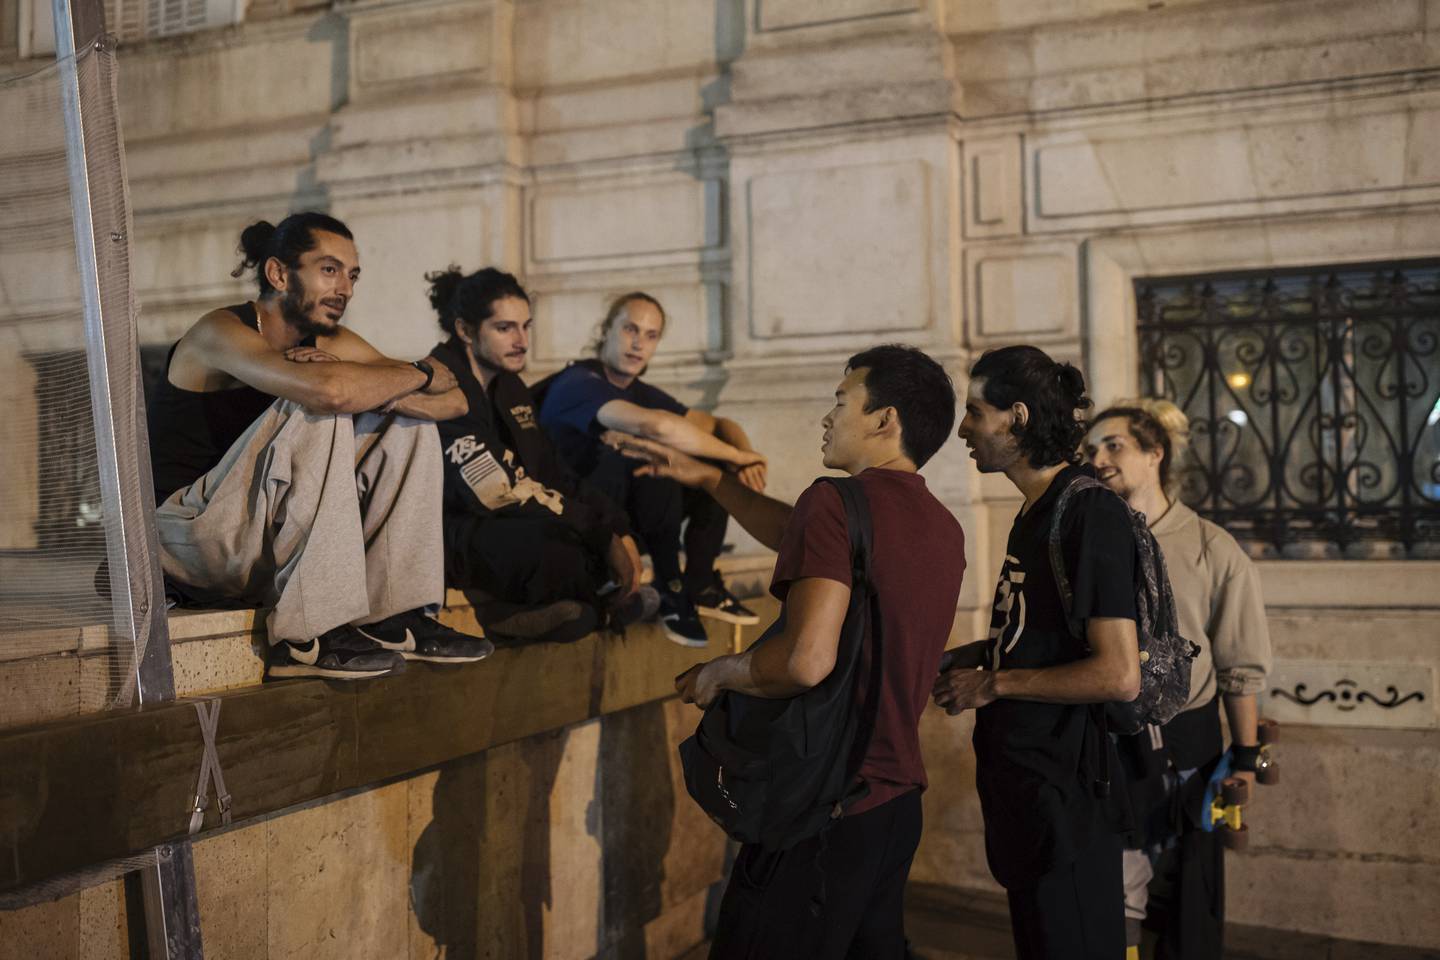 Aktivister fra gruppa On the Spot tar en prat før de går løs på et nattlig tokt for å spare strøm i Paris. Foto: Lewis Joly / AP / NTB